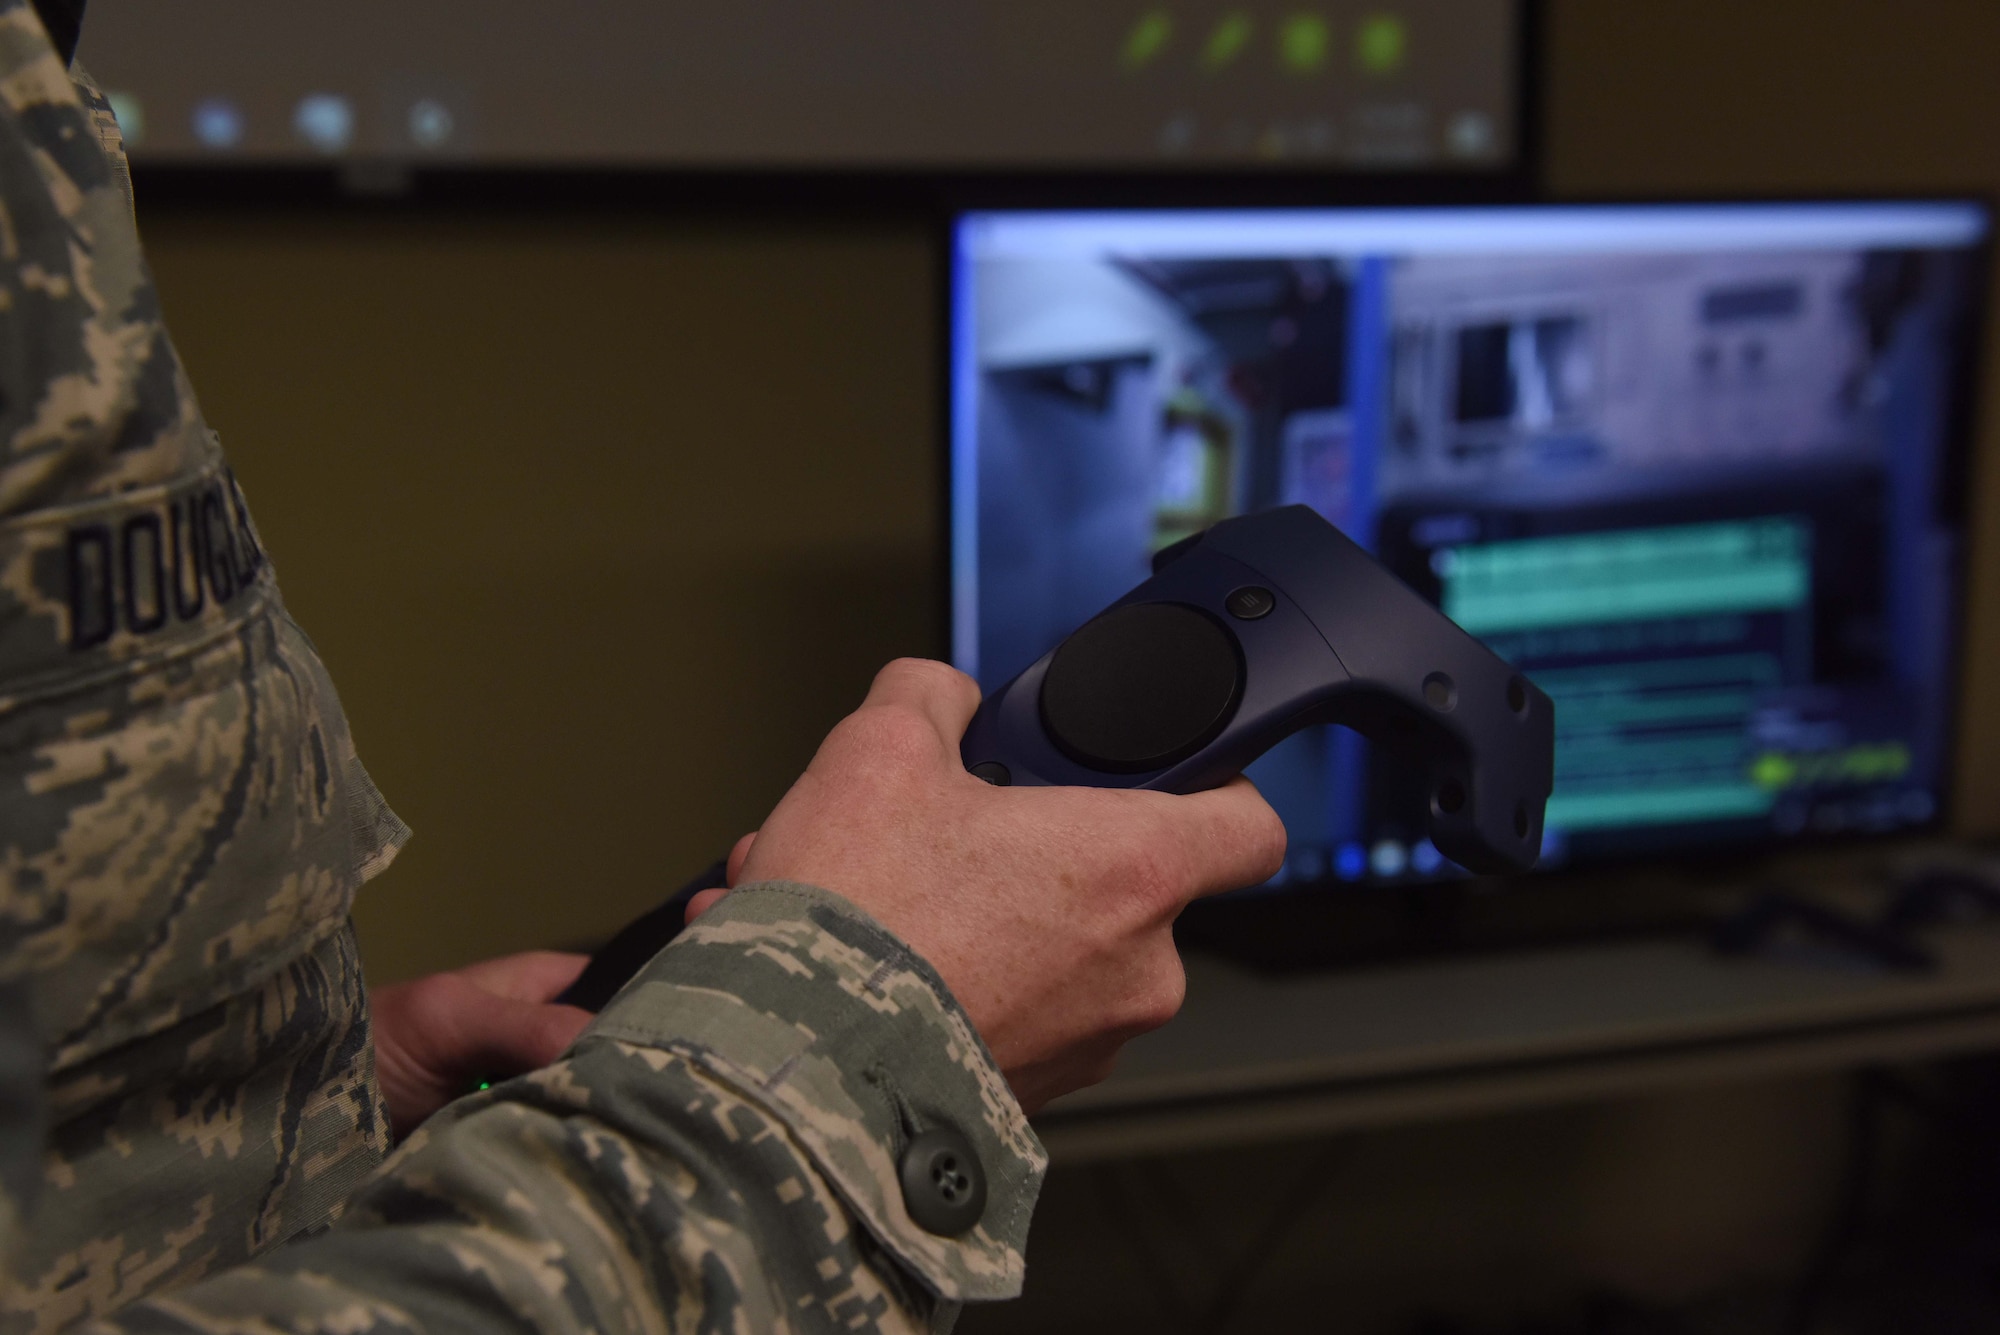 A closeup photo of someone wearing an Airman Battle Uniform holding a virtual reality controller